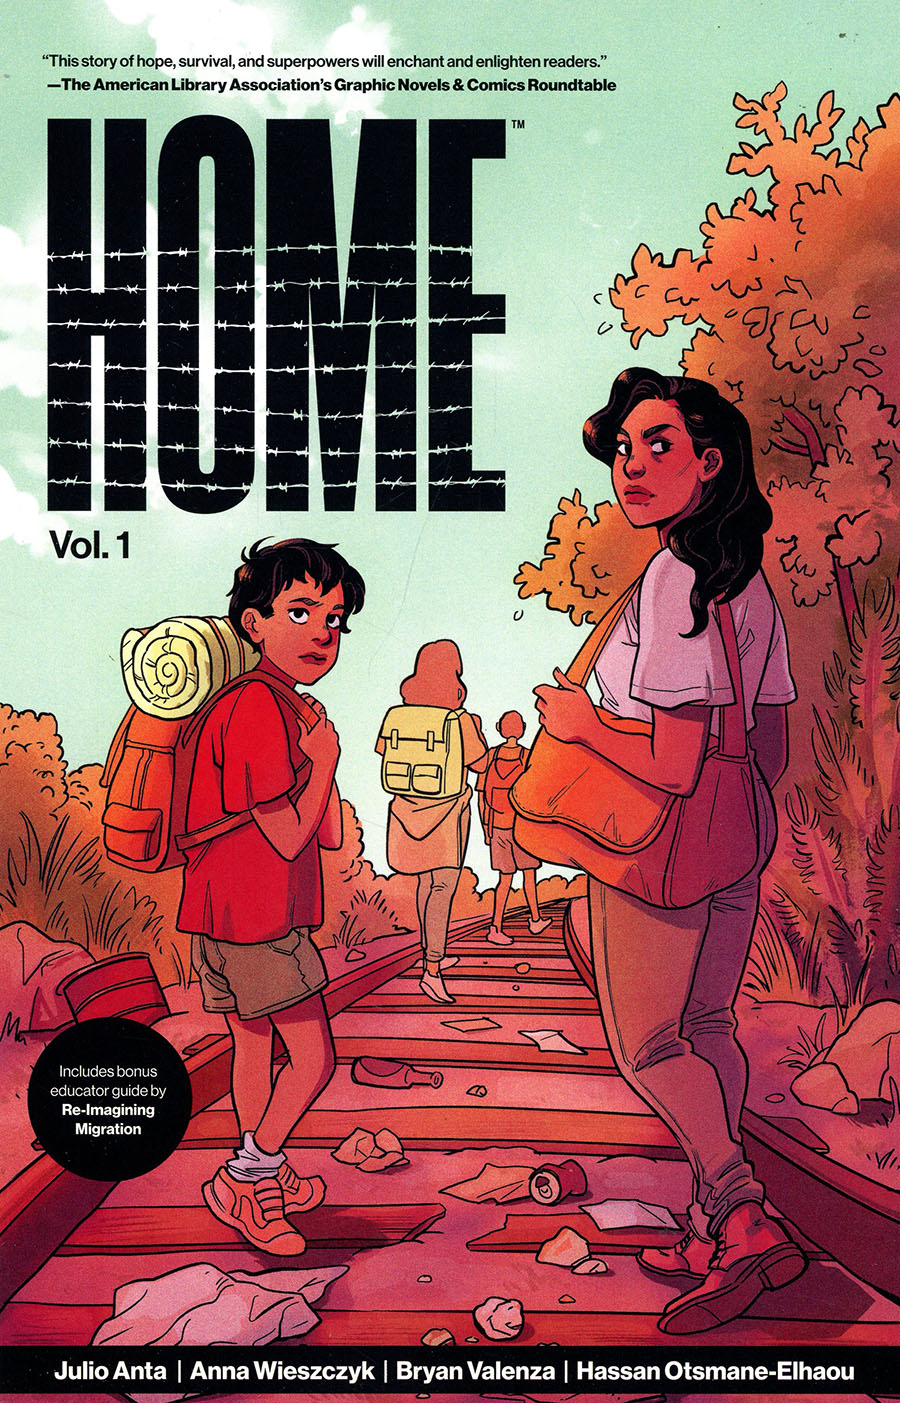 Home Vol 1 TP (Image Series)